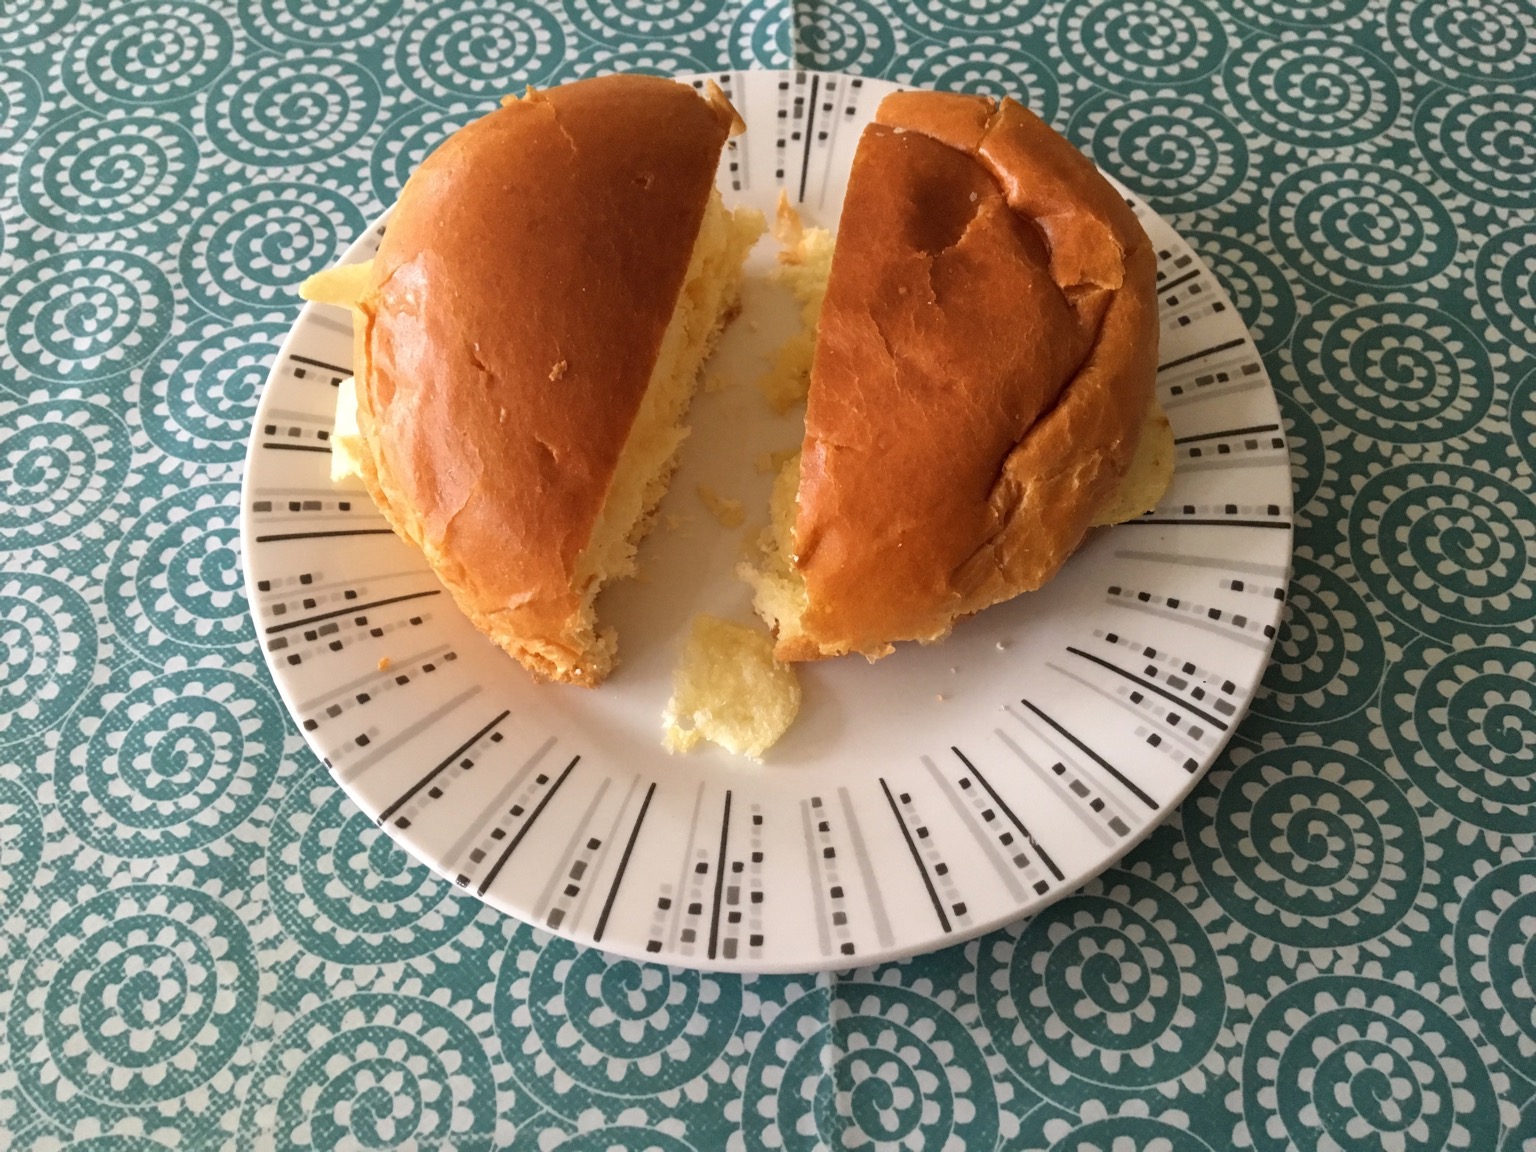 Halved brioche bun containing potato crisps